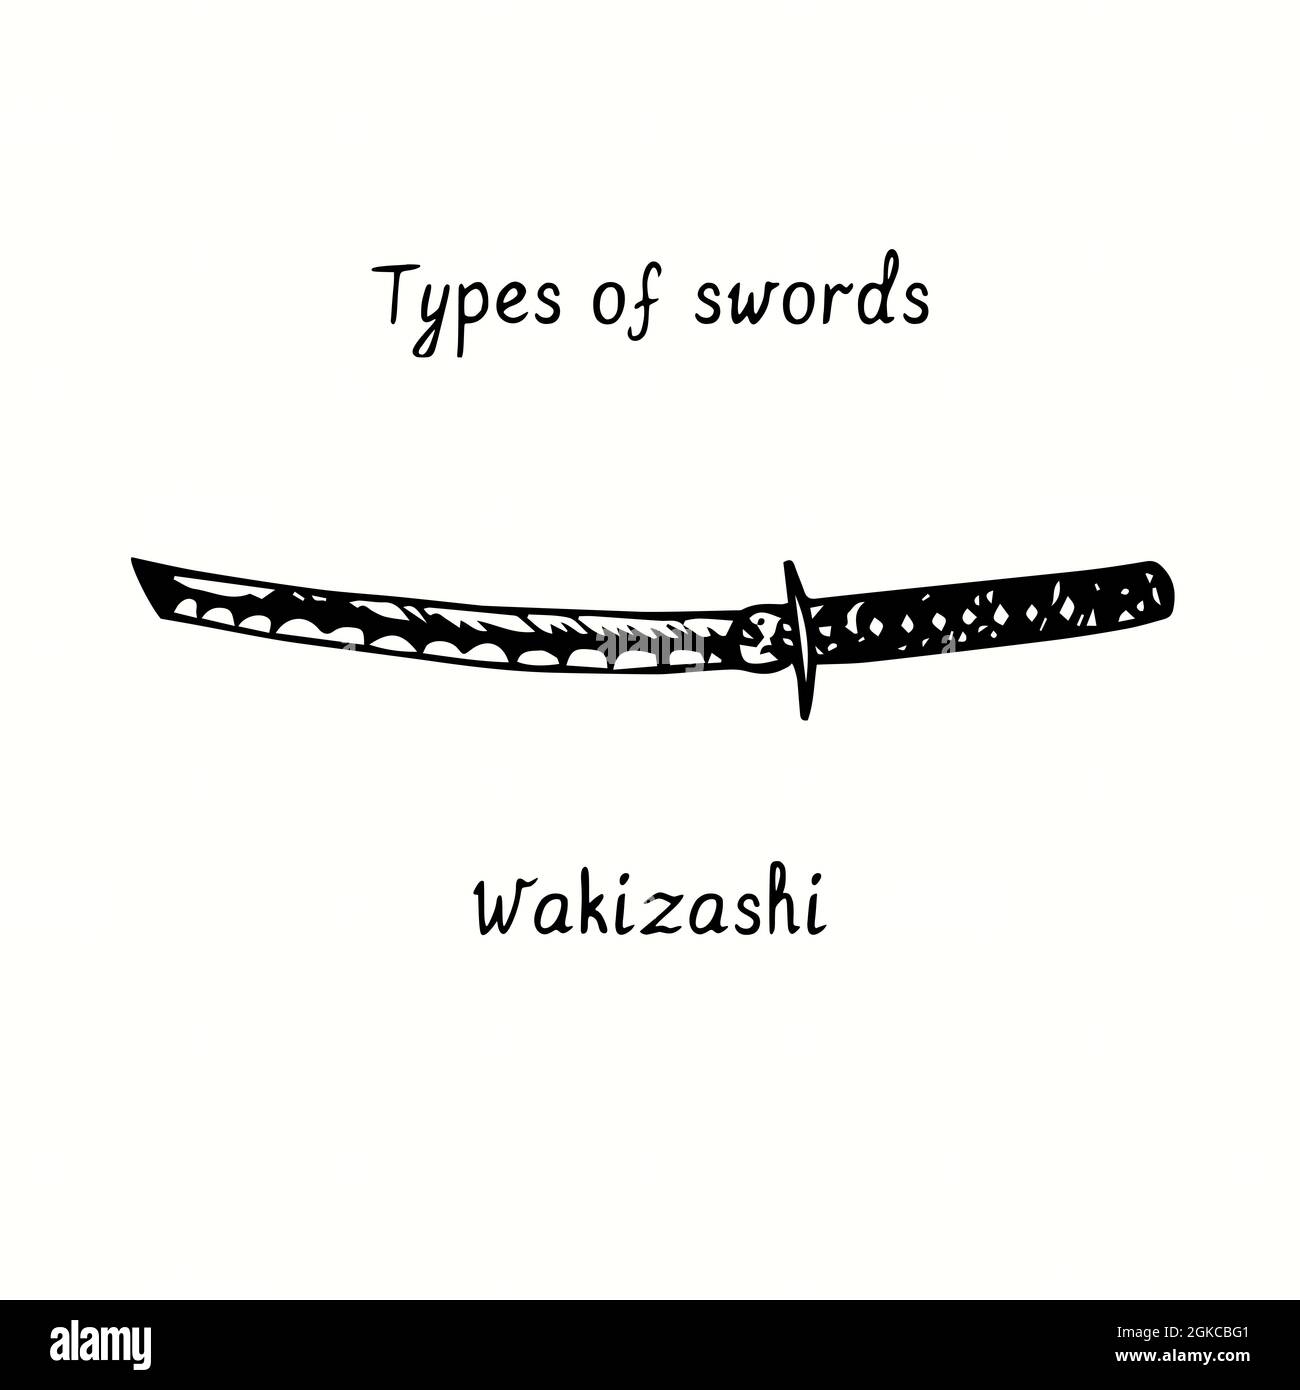 wakizashi sword drawing